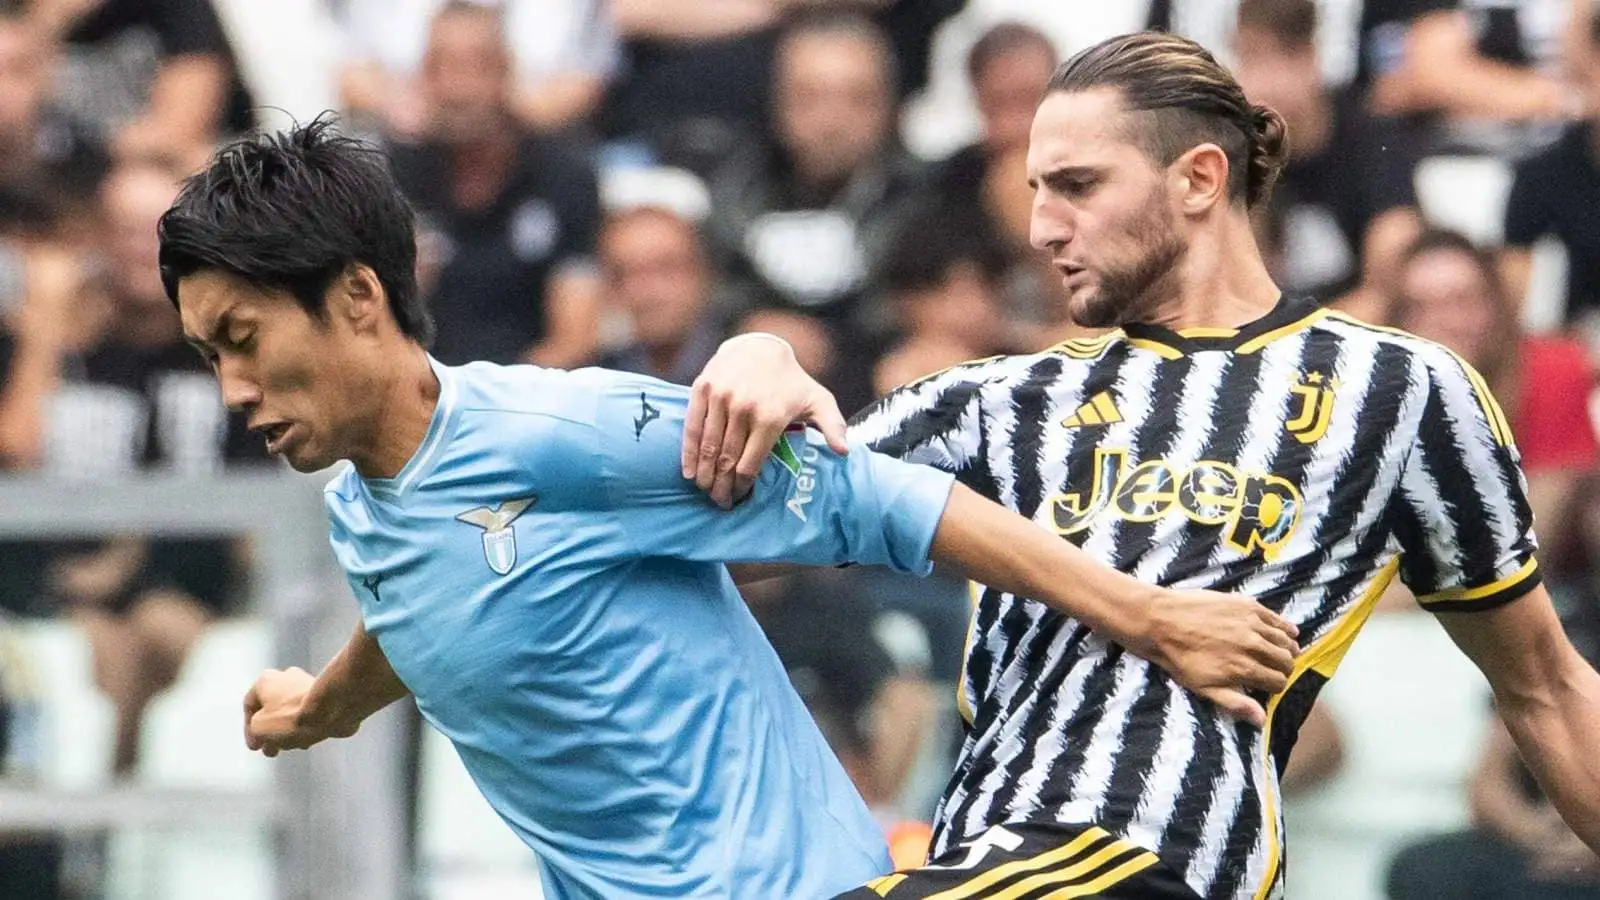 Juventus midfielder Adrien Rabiot challenging Lazio's Daichi Kamada